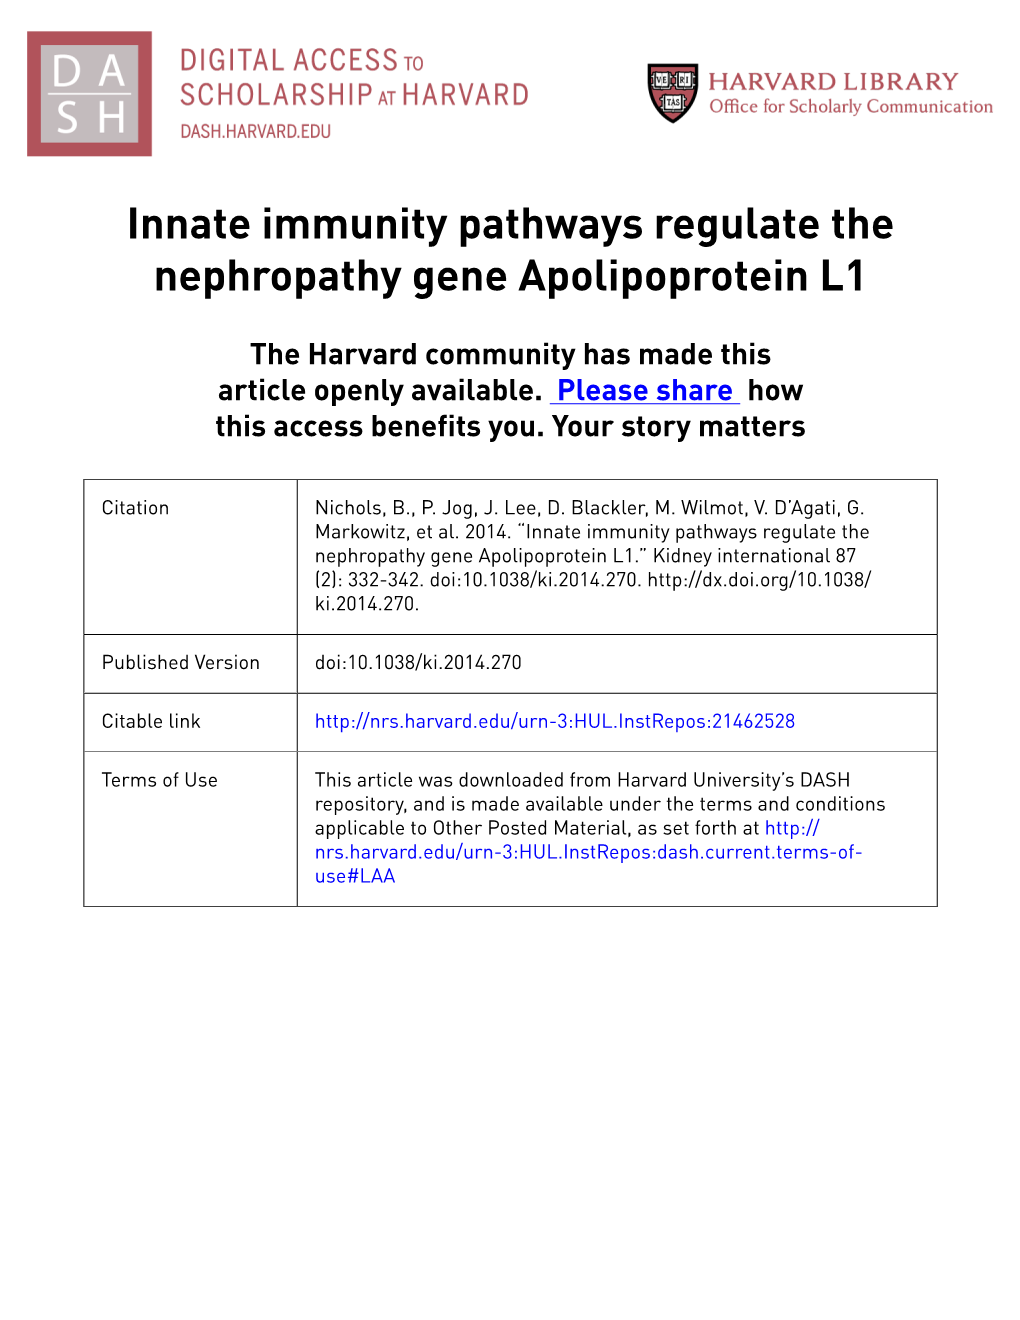 Innate Immunity Pathways Regulate the Nephropathy Gene Apolipoprotein L1